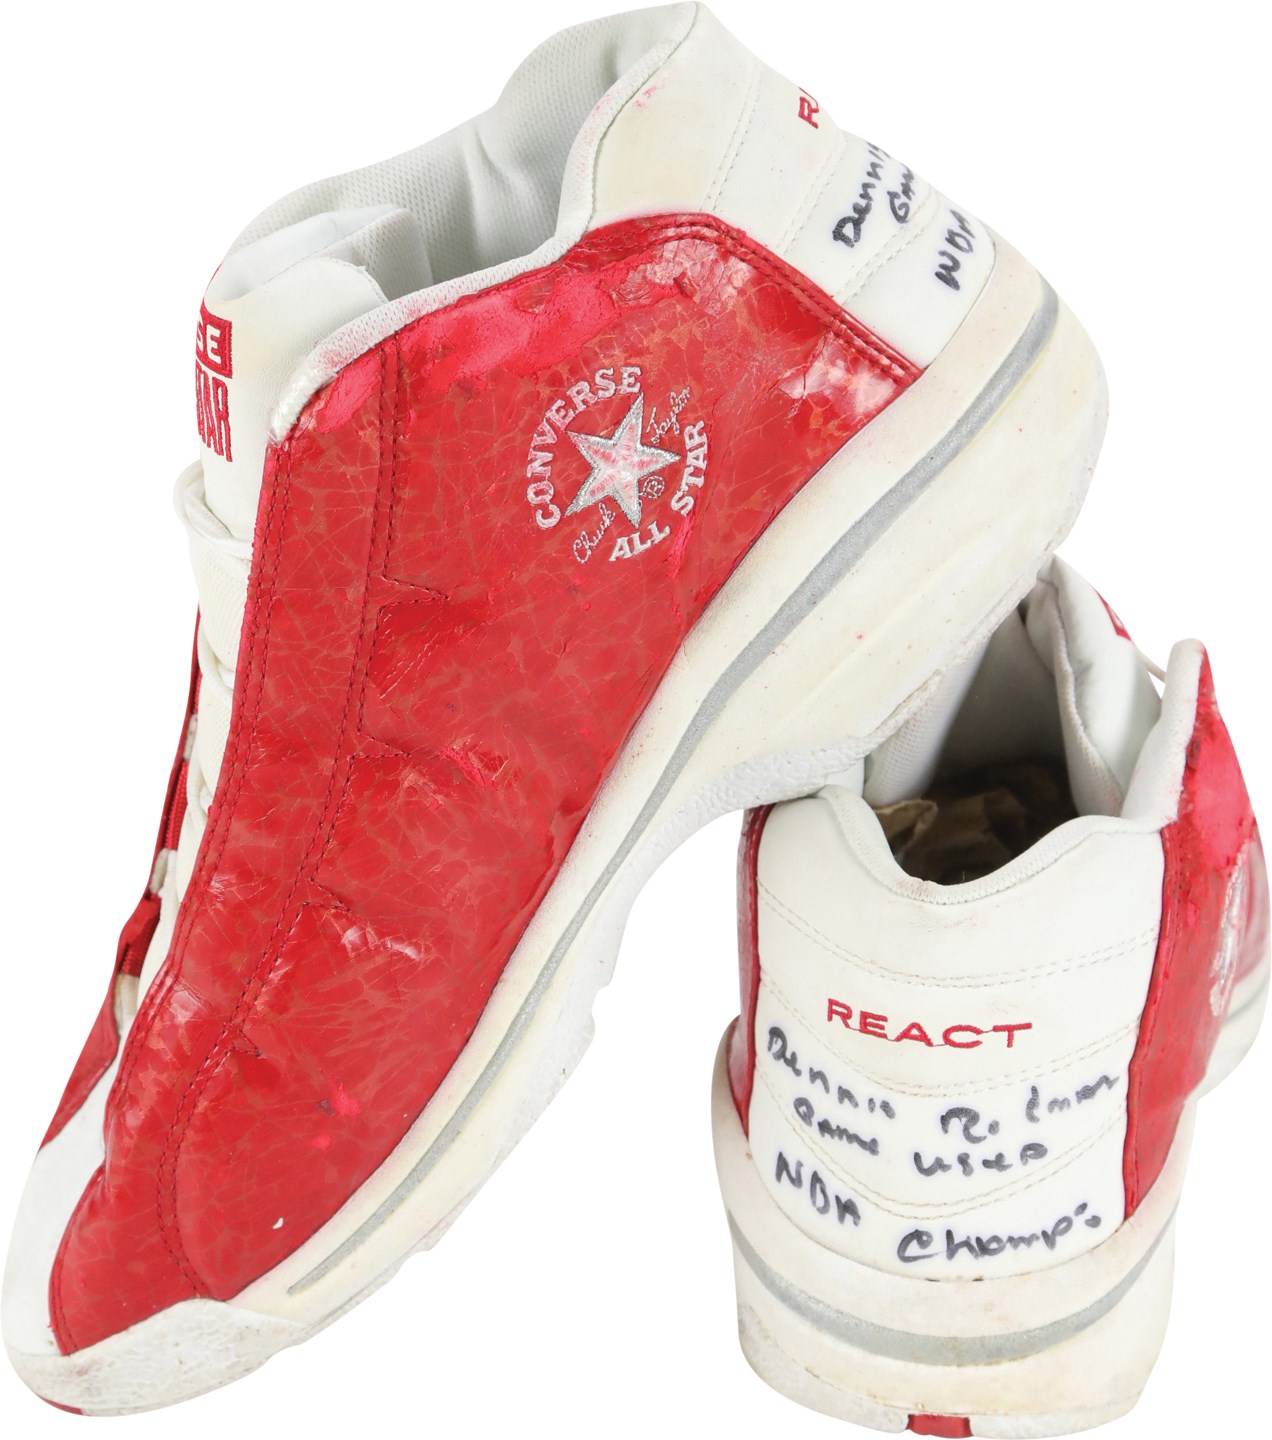 1997-98 Dennis Rodman Chicago Bulls Game-Worn Converse Shoes